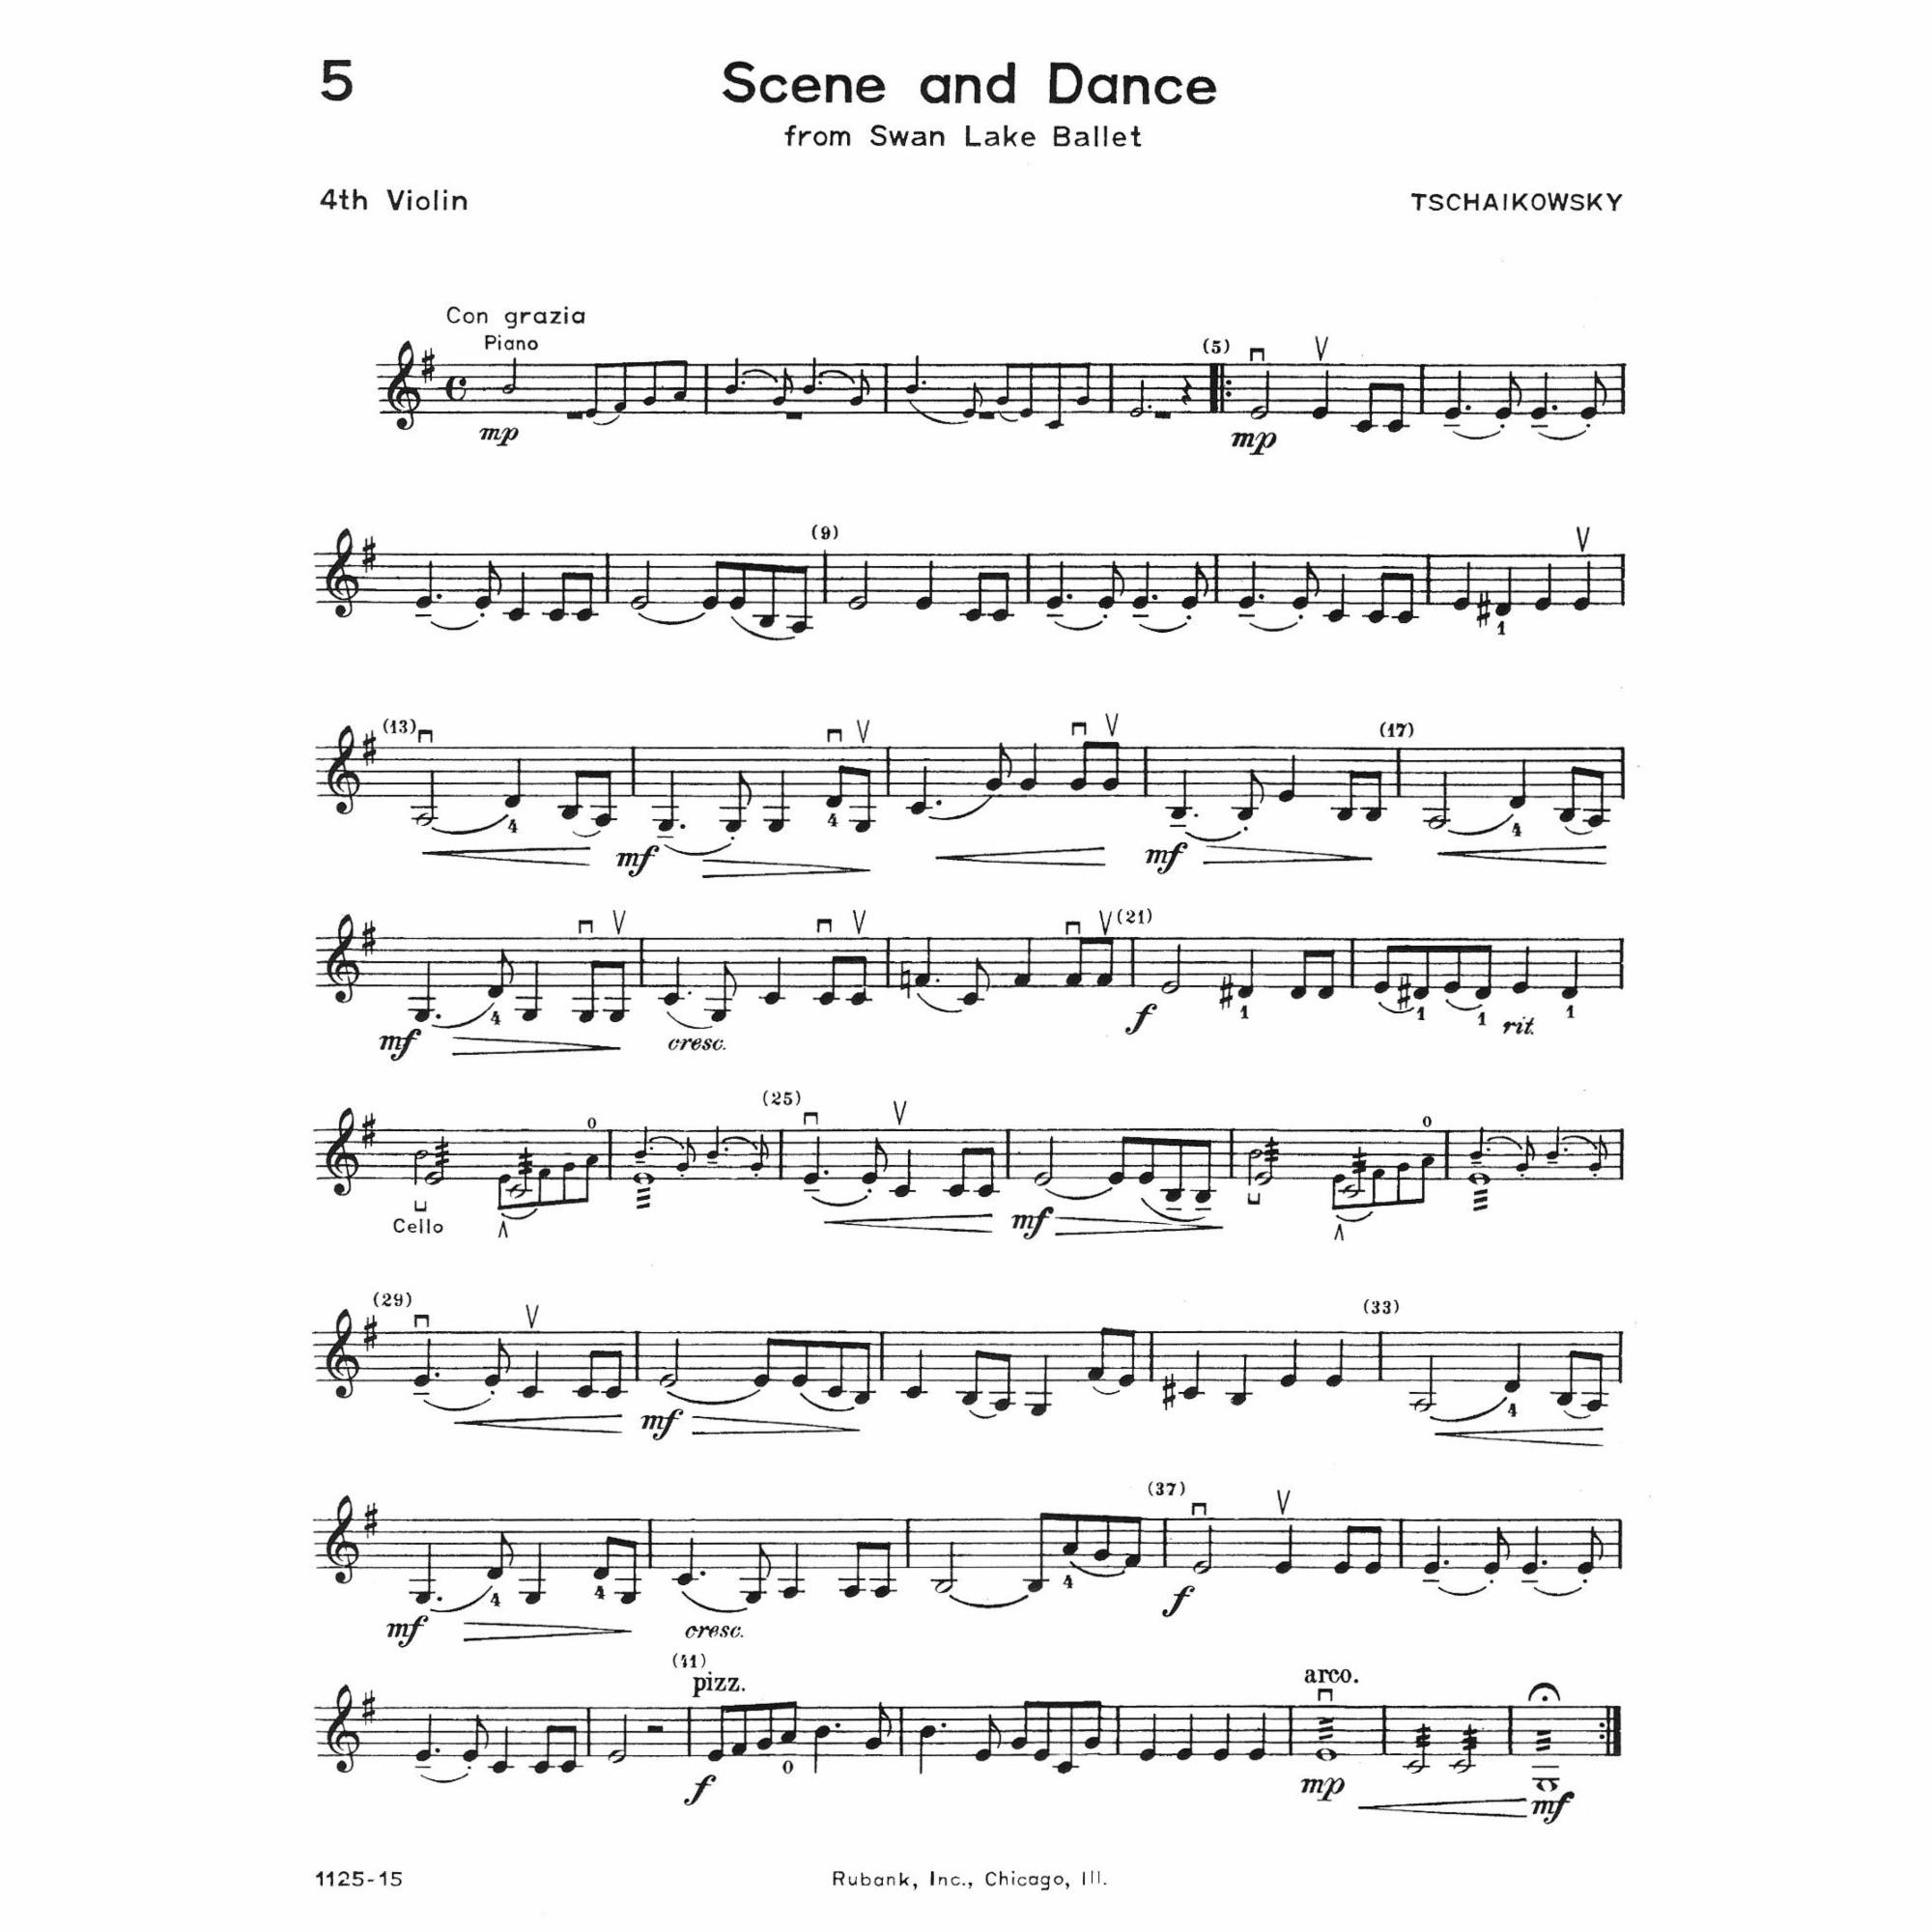 Sample: Fourth Violin (Pg. 5)